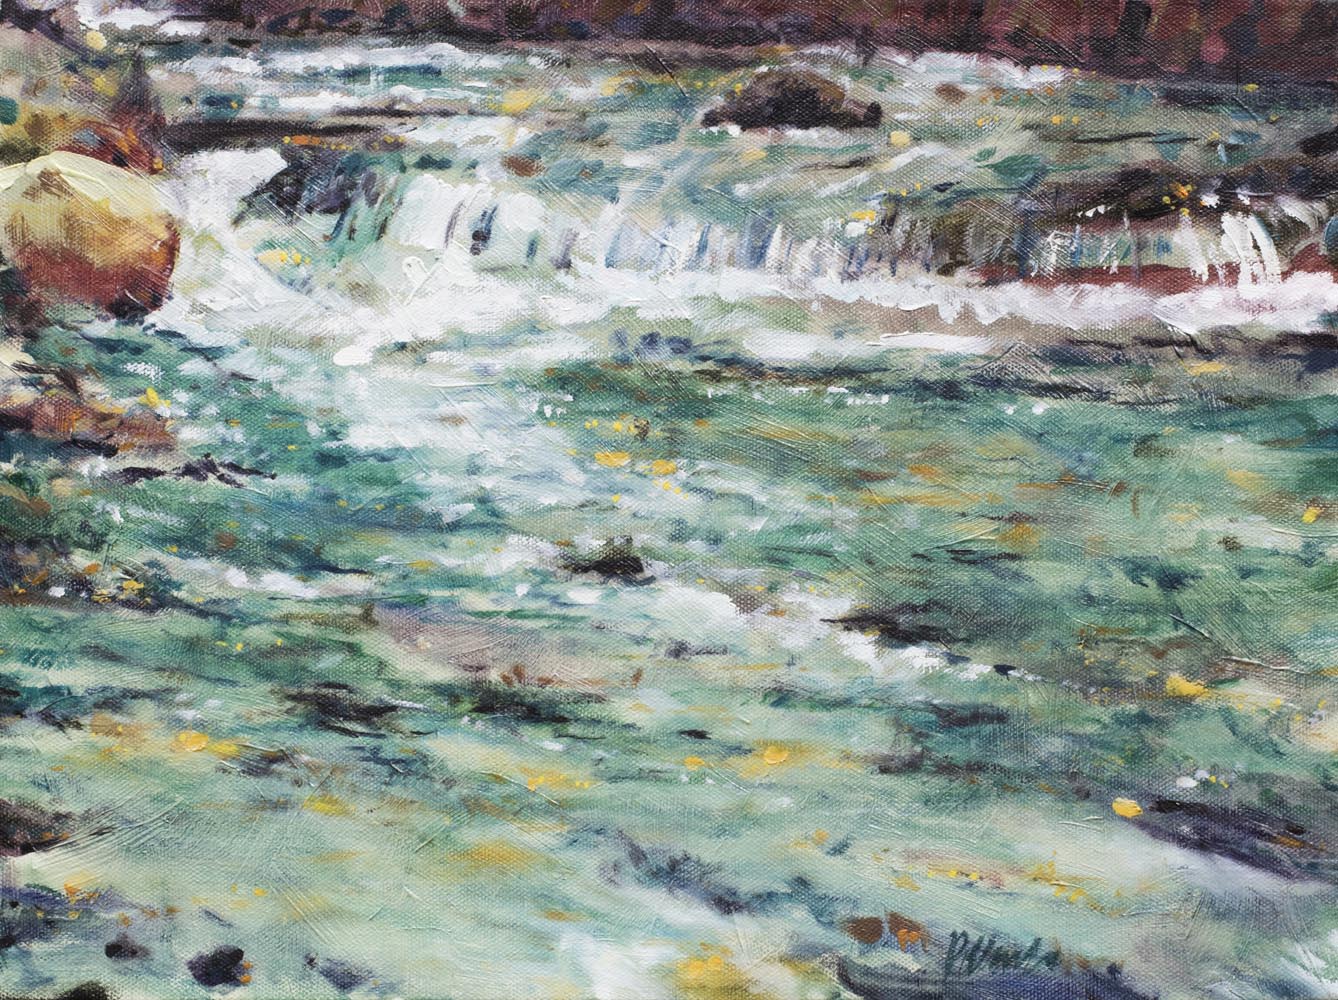 the stream | Landscapes of British Columbia | Artist painter Kim Pollard | Canada | Pacific Northwest